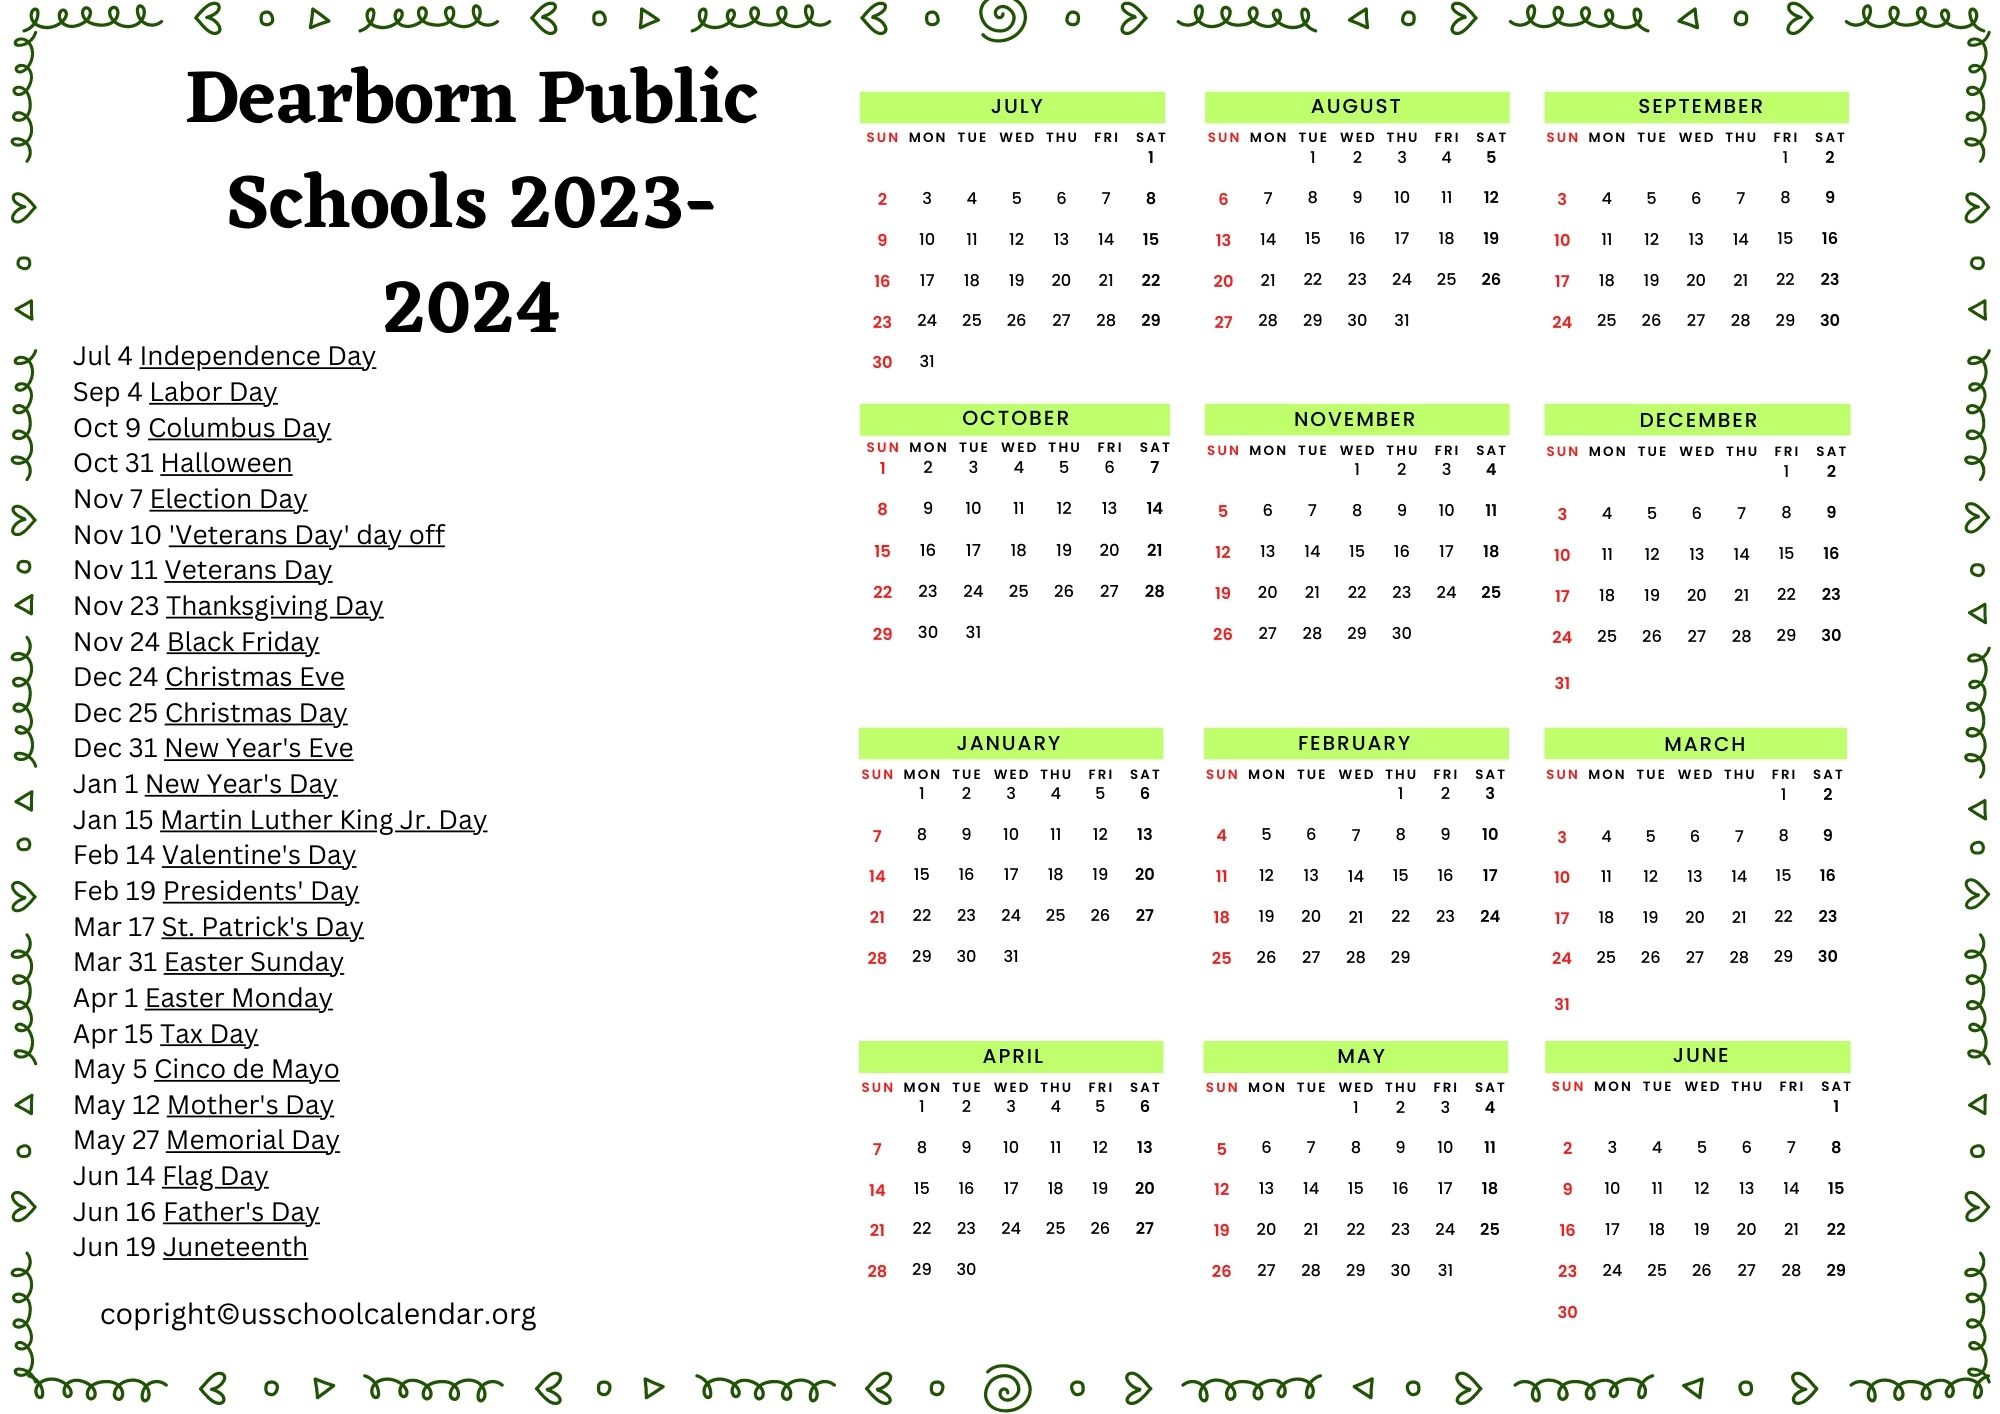 Dearborn Public Schools Calendar with holidays 20232024